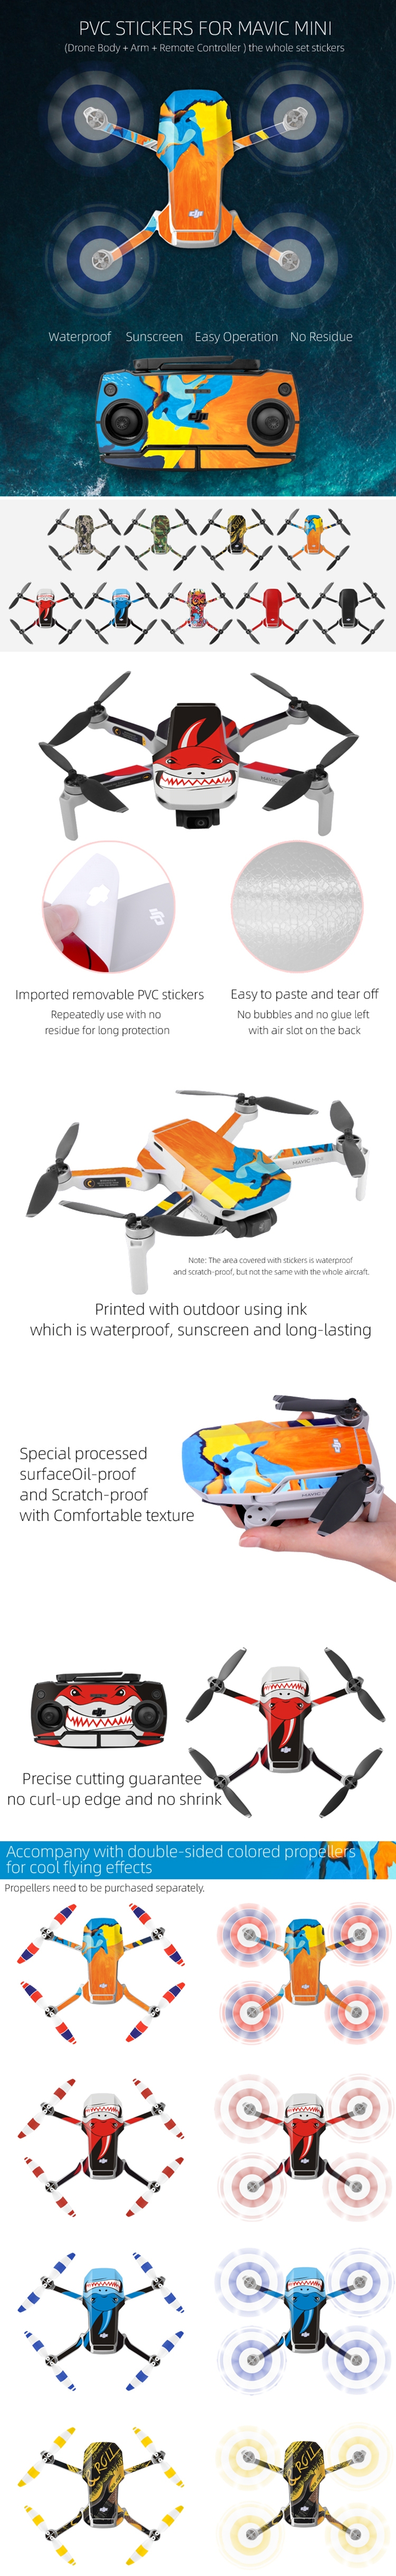 Sunnylife Anti-Scratch Waterproof Body&Remote Control Stickers For DJI Mavic Mini RC Drone Qoadcopter